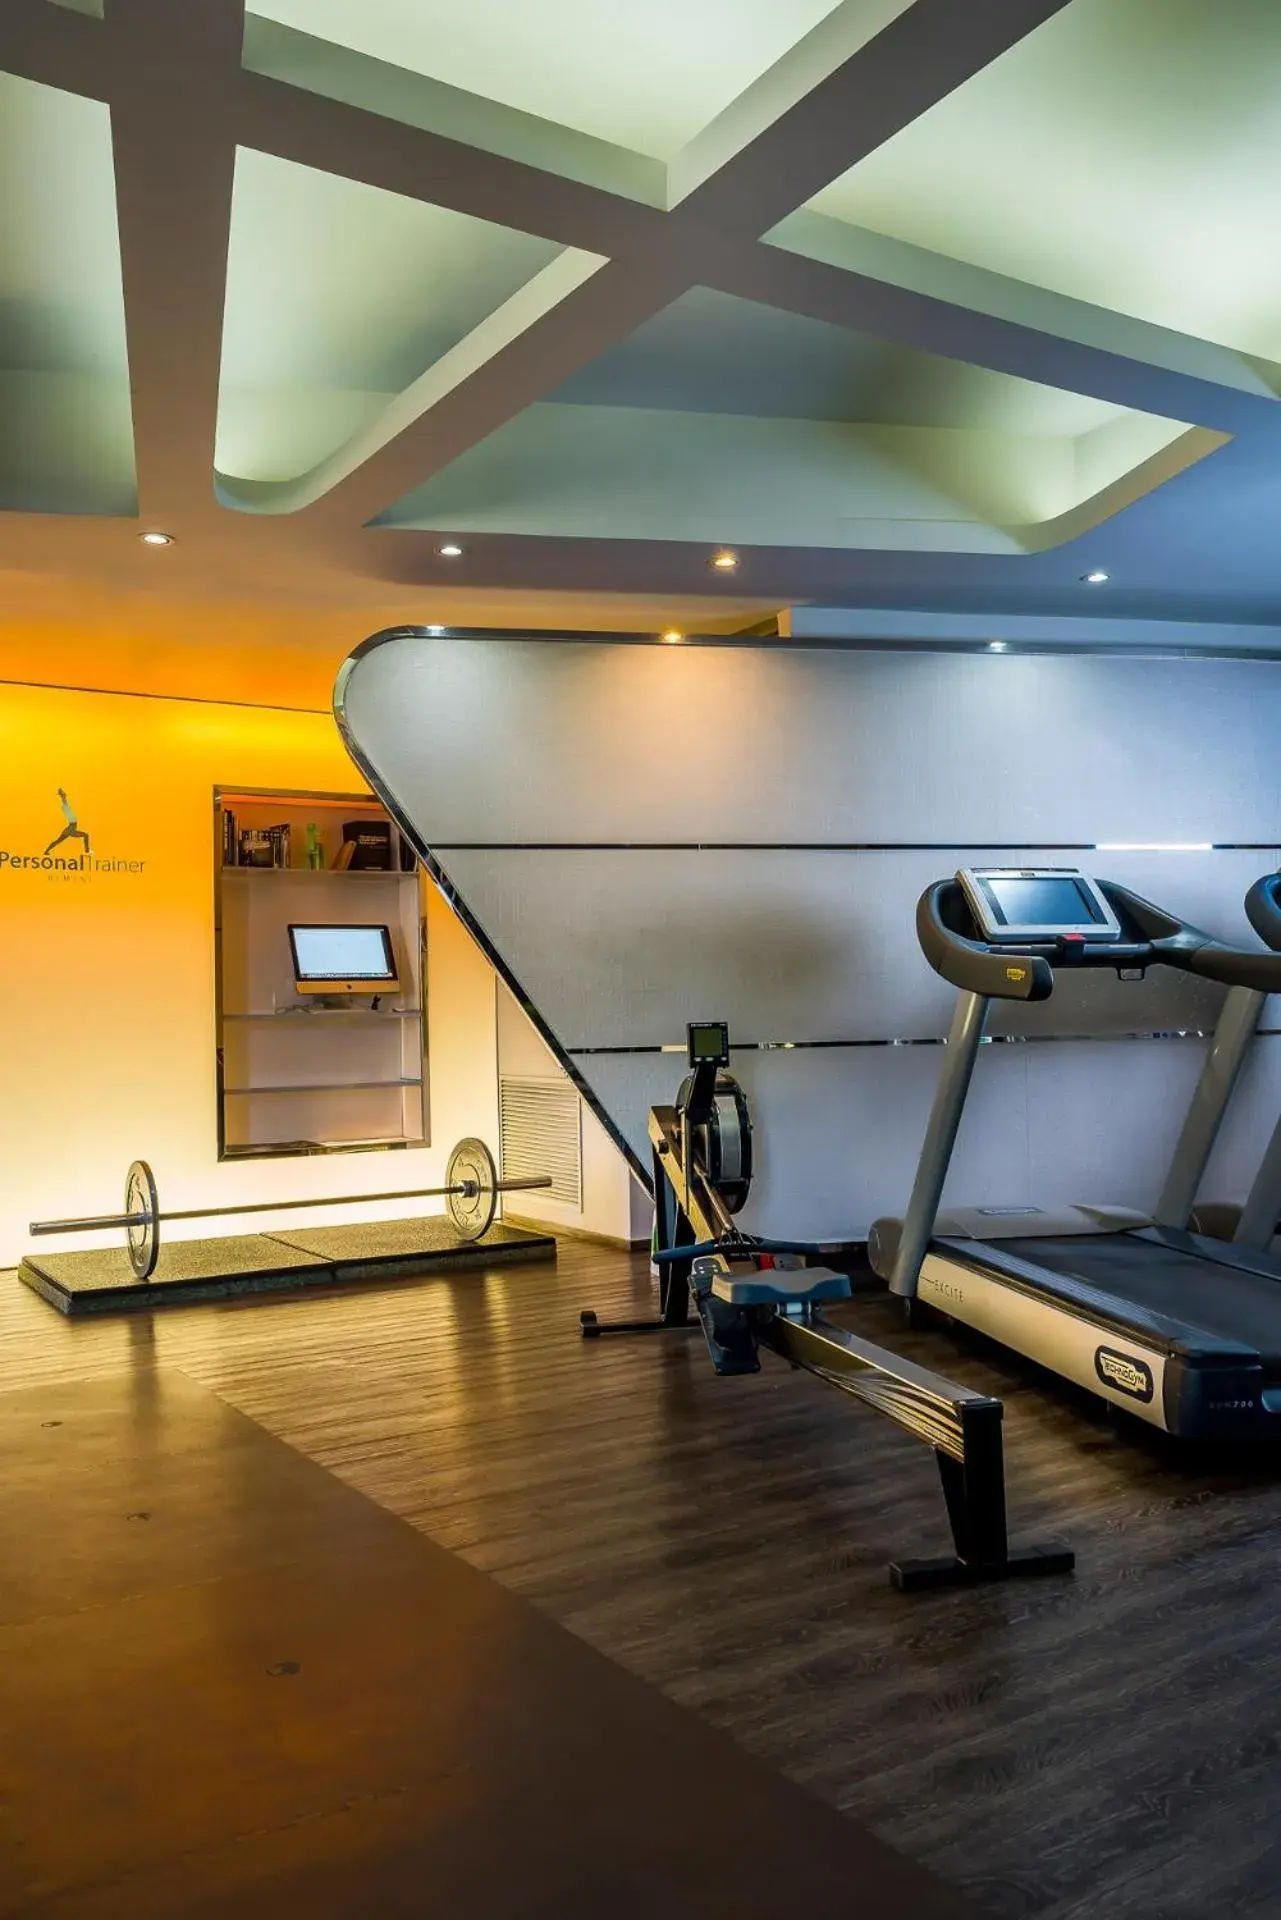 Fitness centre/facilities, Fitness Center/Facilities in Hotel Villa Rosa Riviera